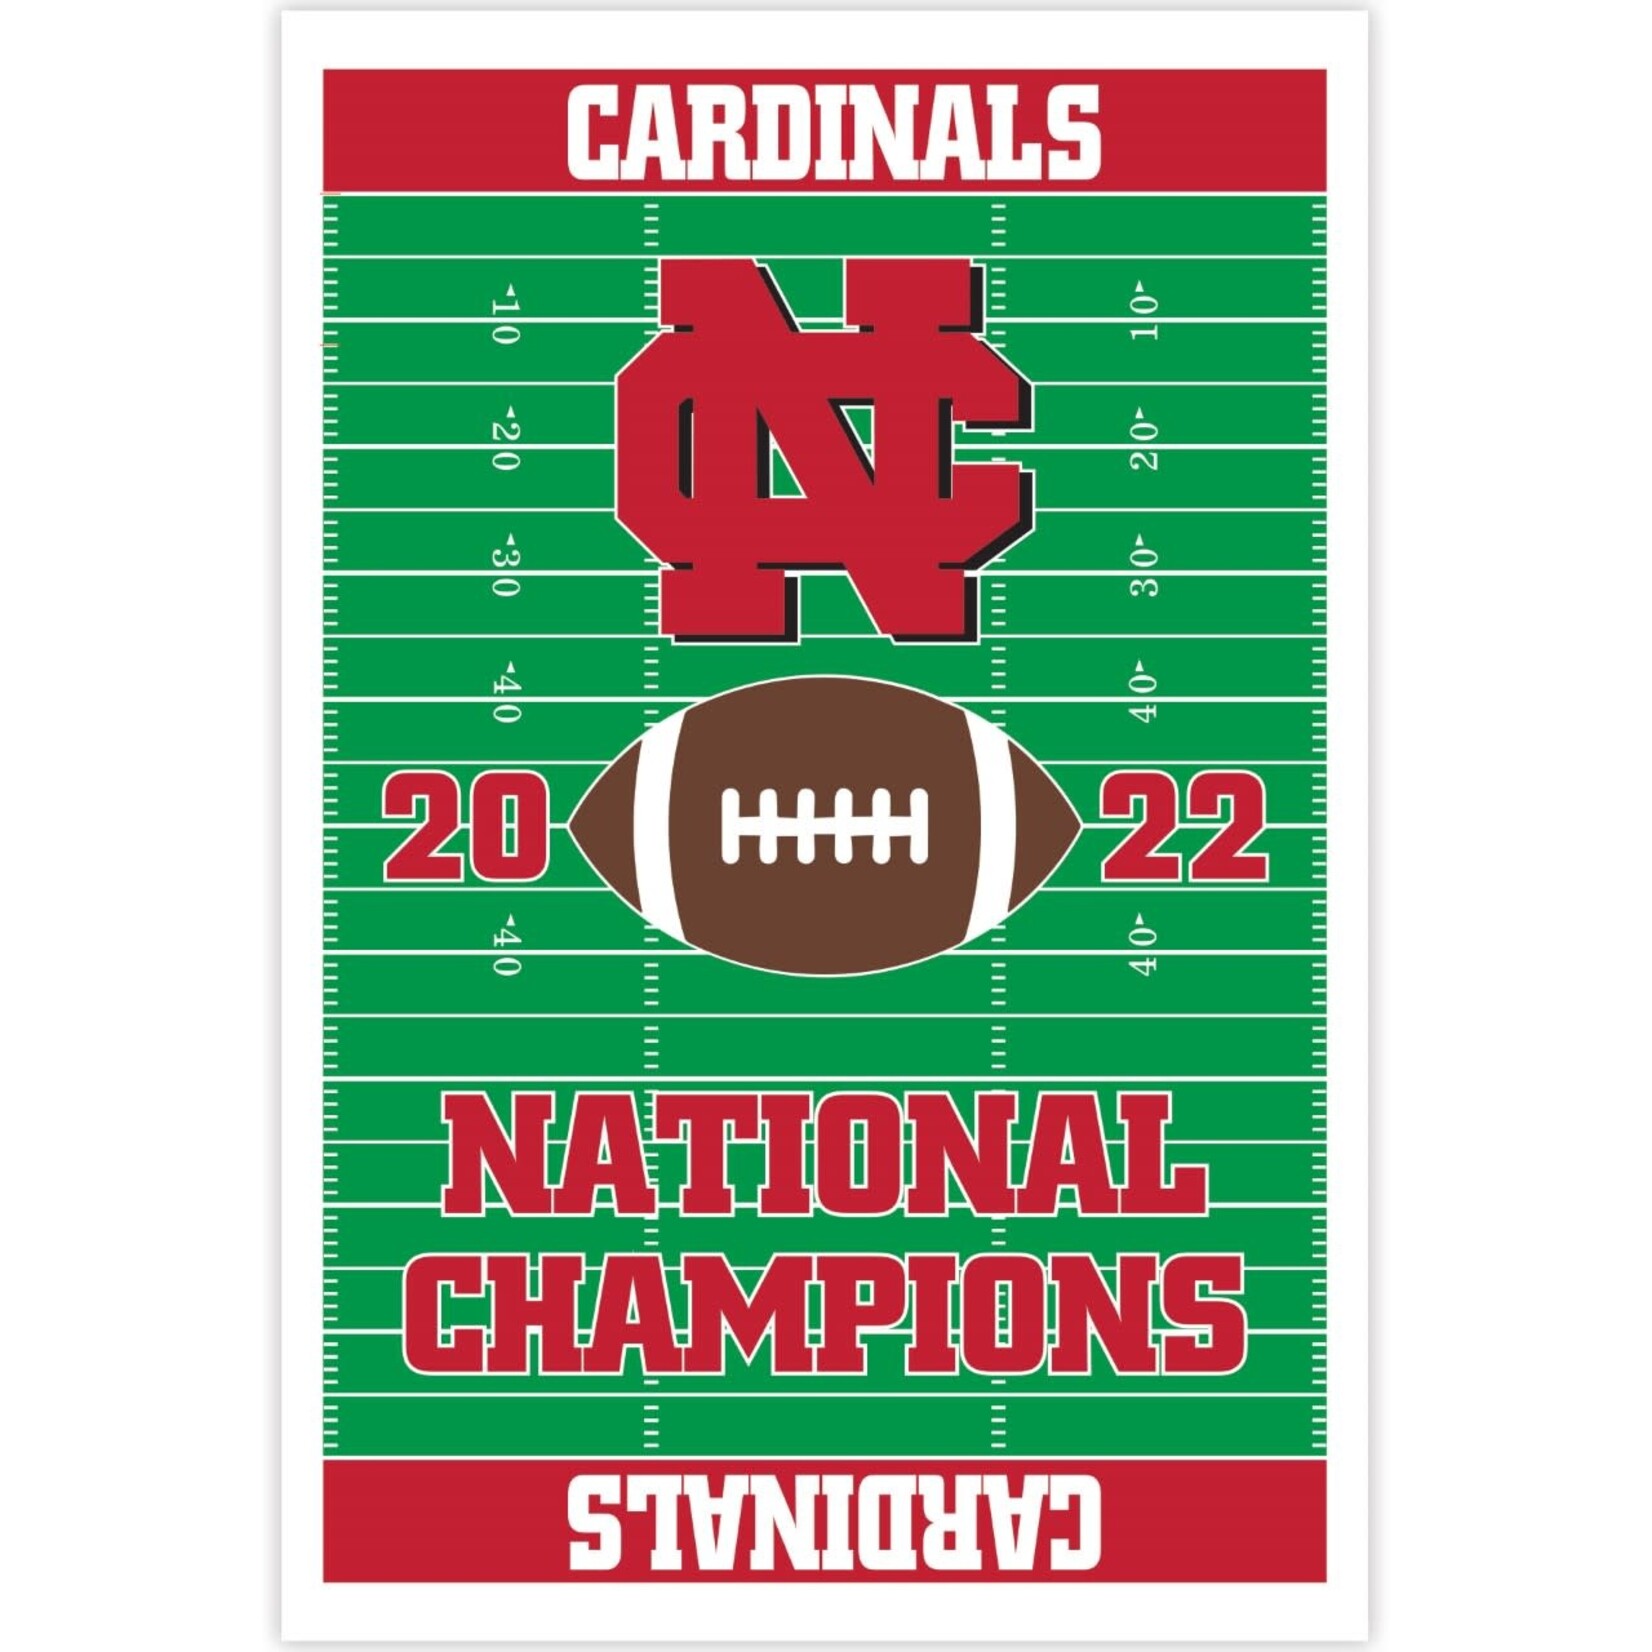 Neil Enterprises Neil Enterprises 2022 National Champions Poster w/football field